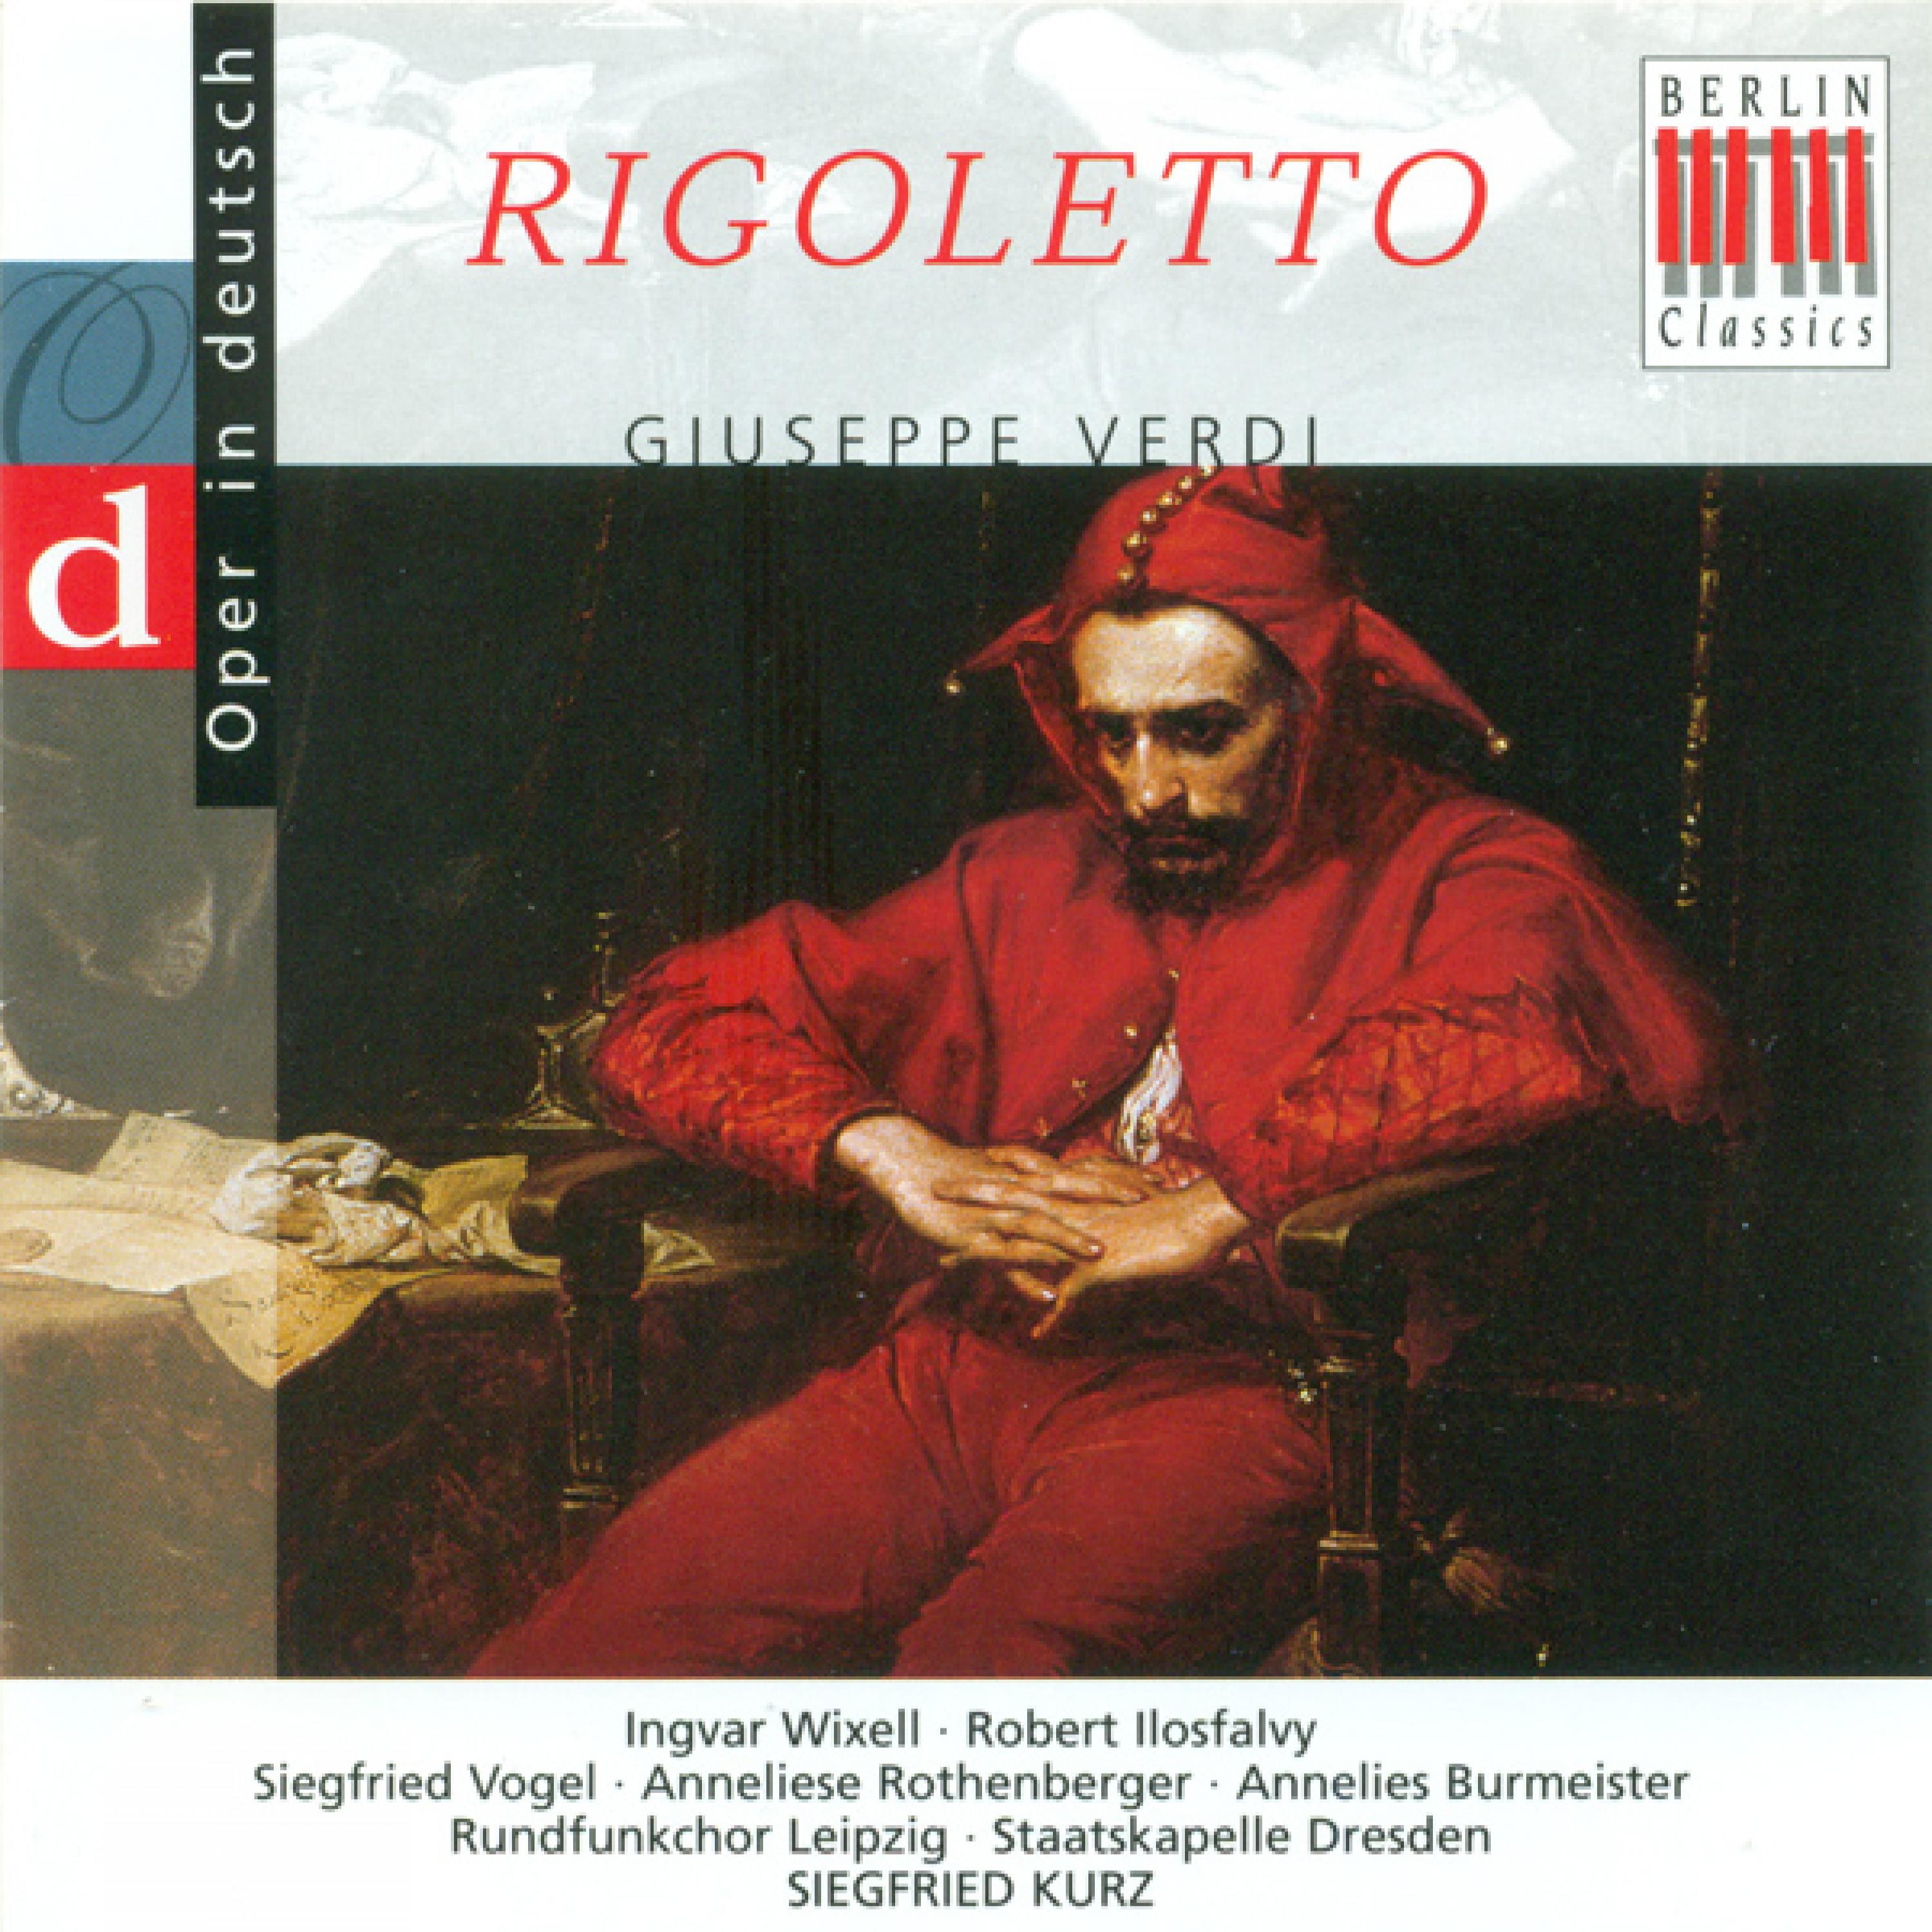 Rigoletto, Act I: "Gualtier Malde" - "Teurer Name, dessen Klang"